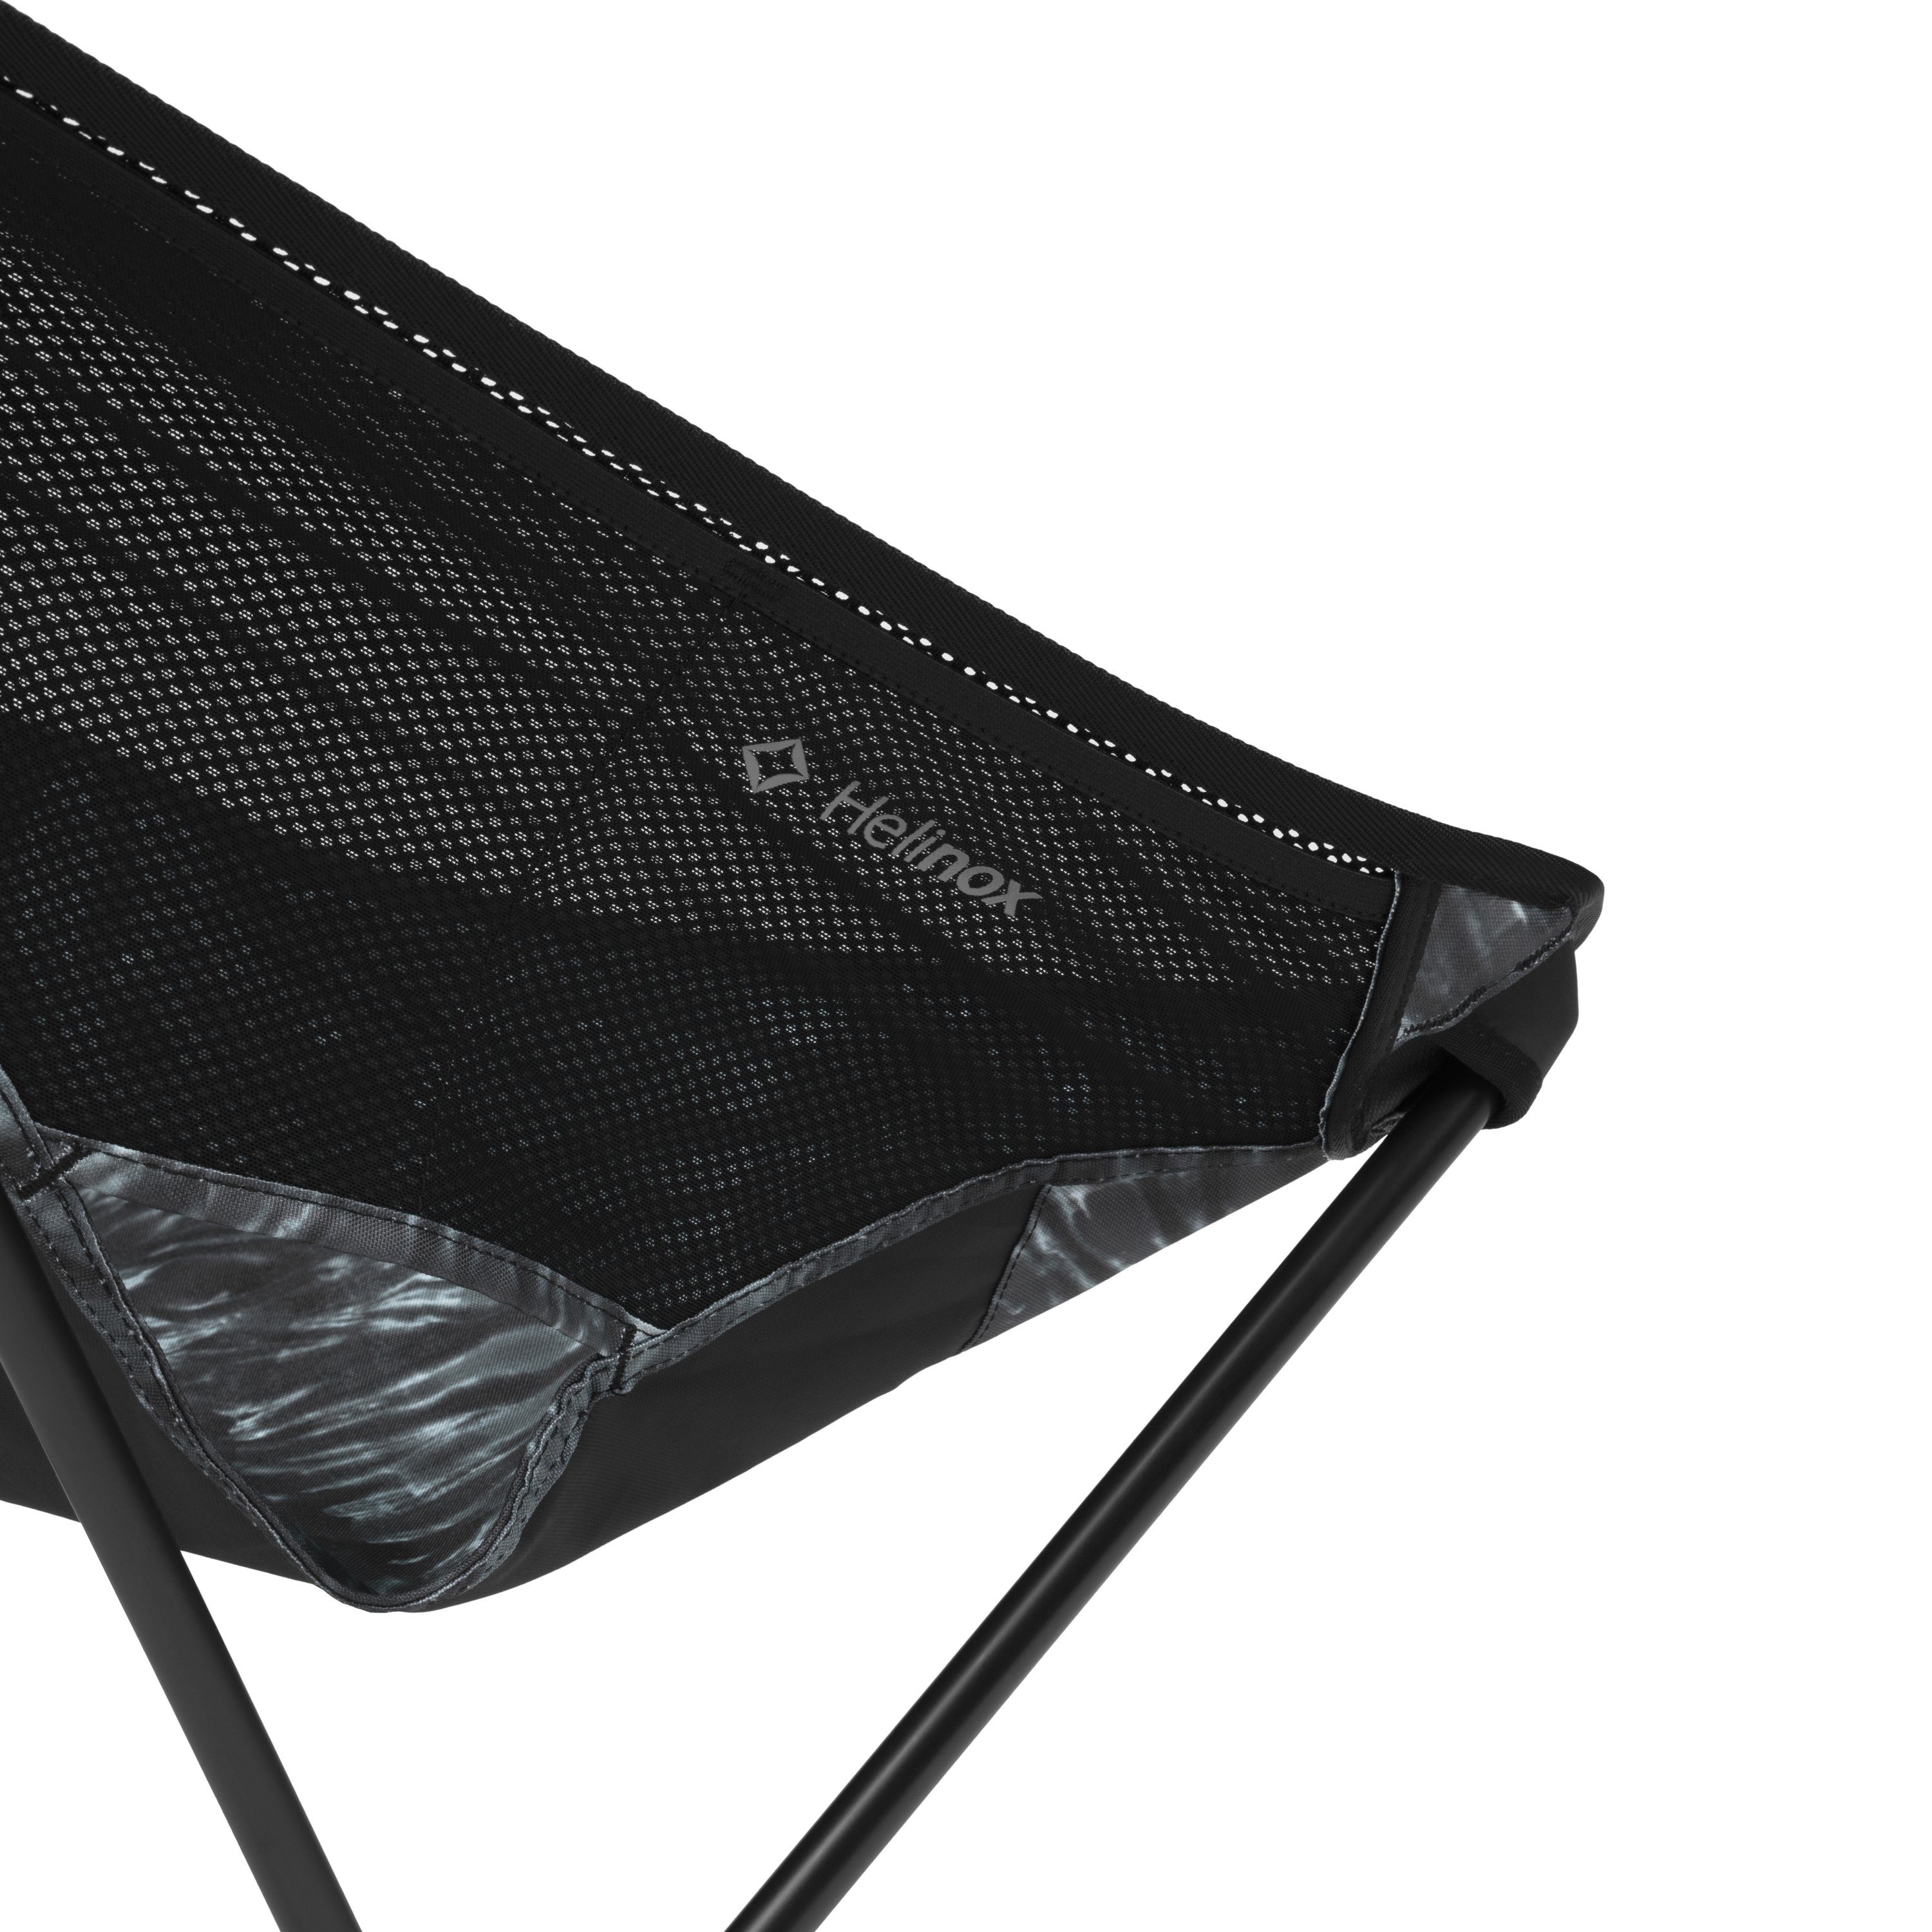 Campingstuhl Chair Helinox kg) (Gewicht Dye Helinox Tie bis Two 1,18kg Campingstuhl / 145 Black